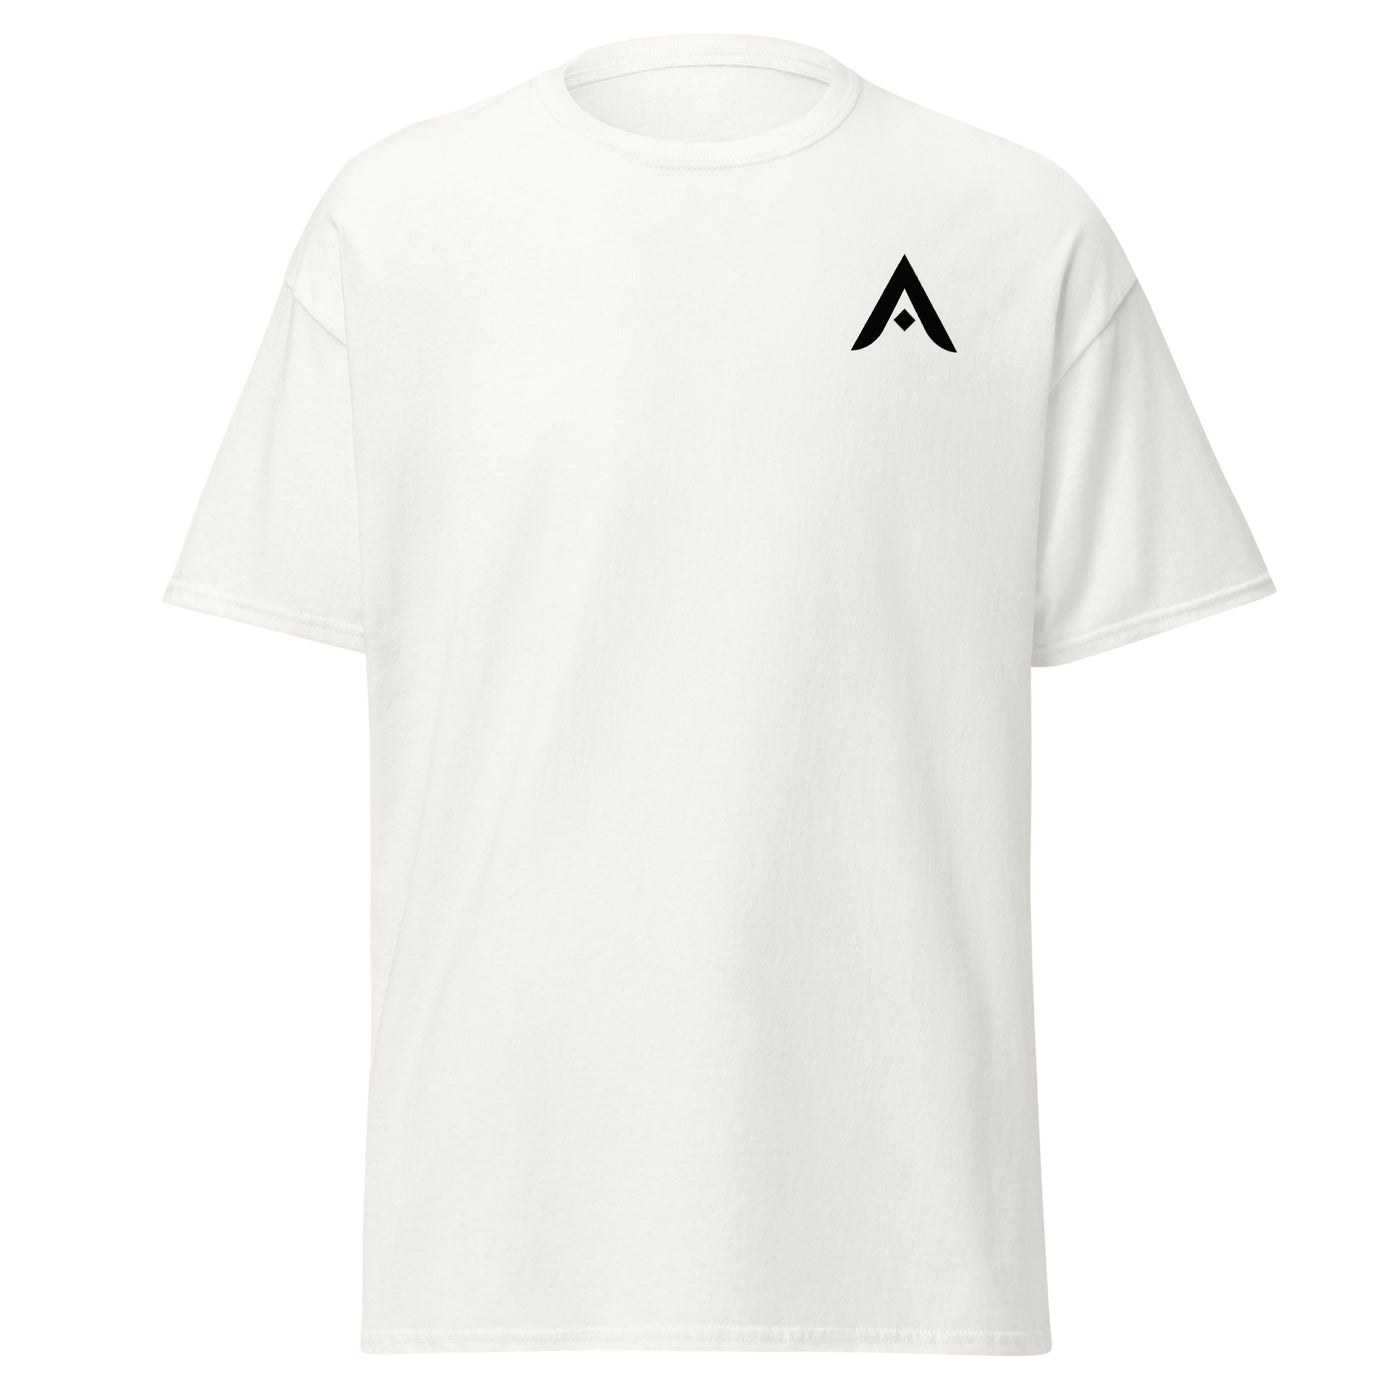 Aware Unisex T-shirt